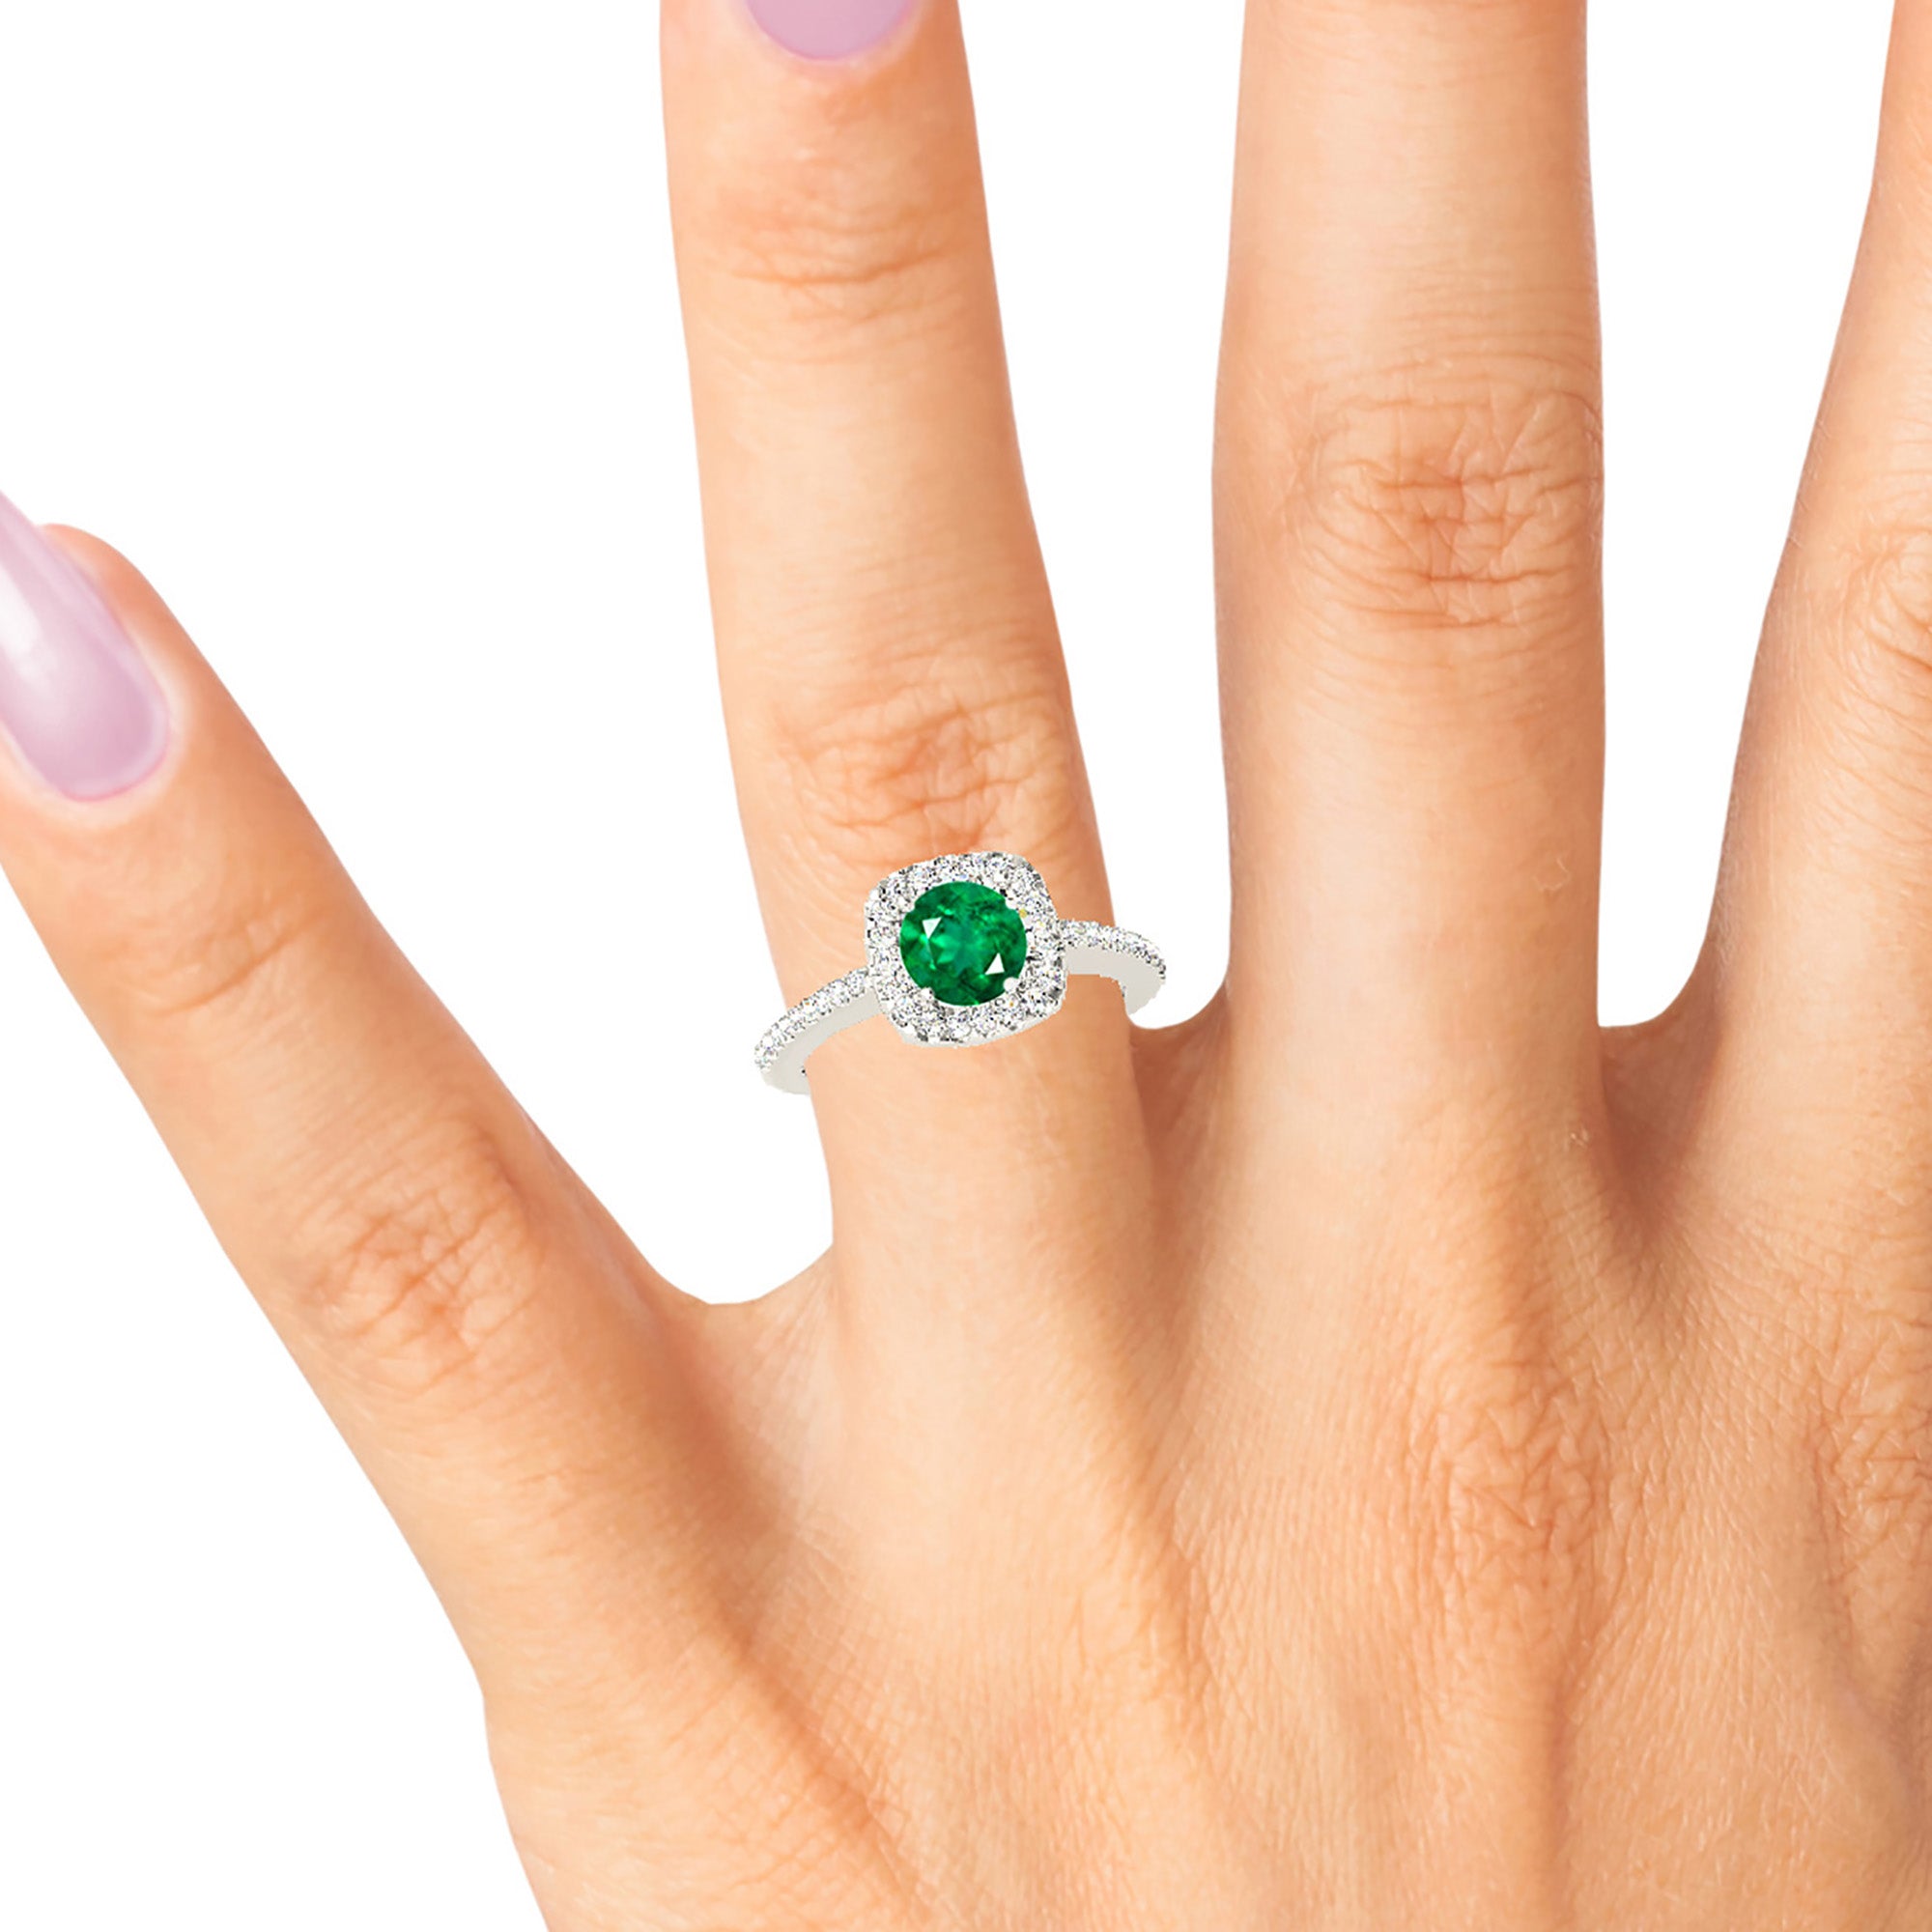 1.68 ct. Genuine Emerald Ring With 0.25 ctw. Diamond Halo And Thin Diamond Shank-in 14K/18K White, Yellow, Rose Gold and Platinum - Christmas Jewelry Gift -VIRABYANI